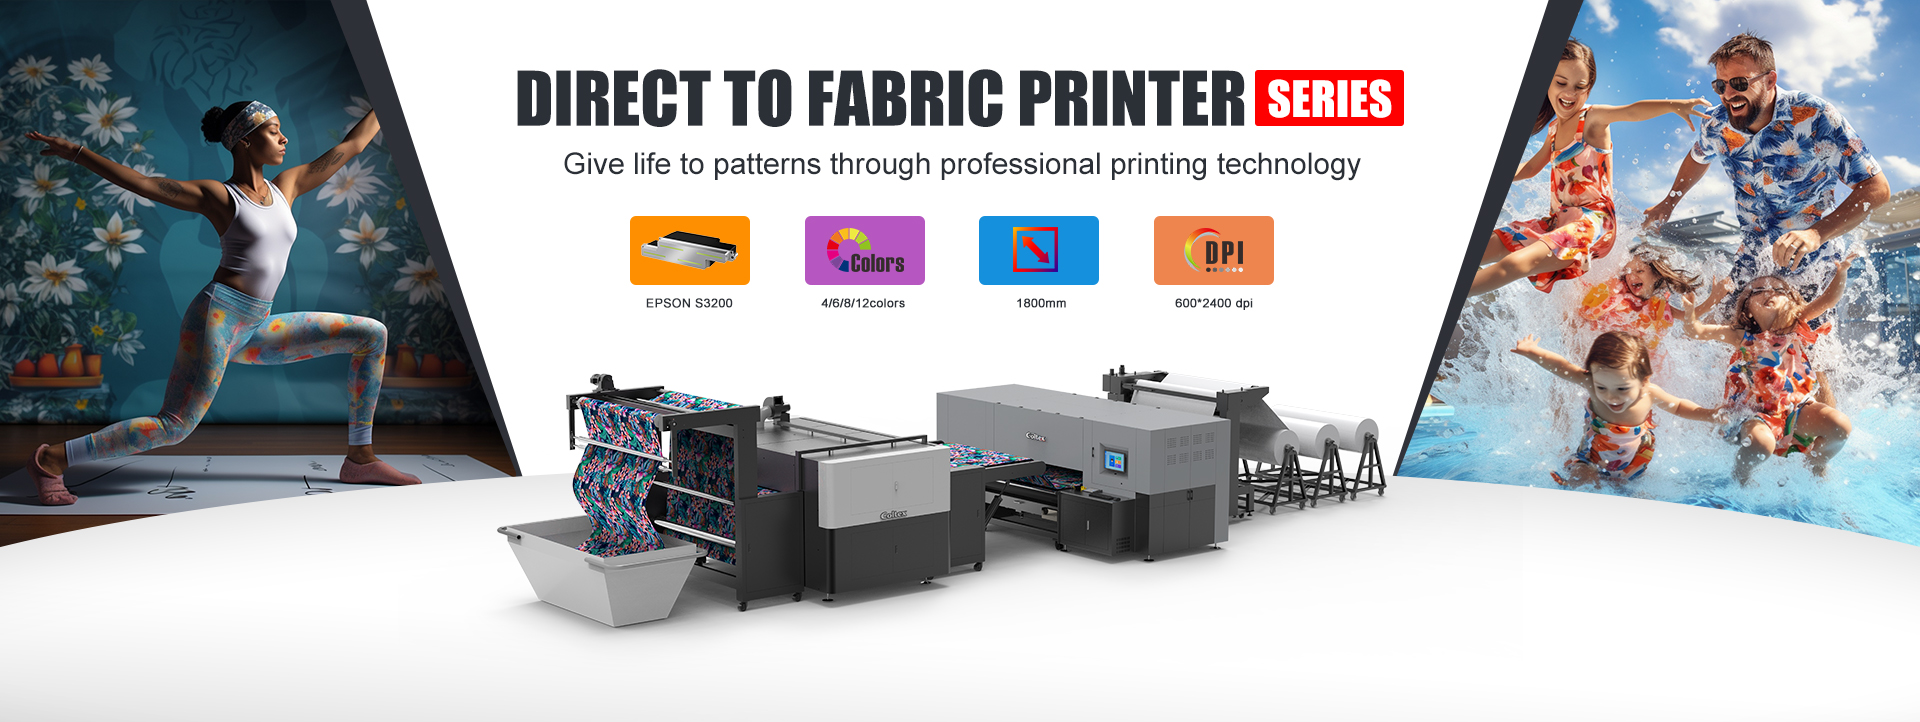 Direct to Fabric Printer